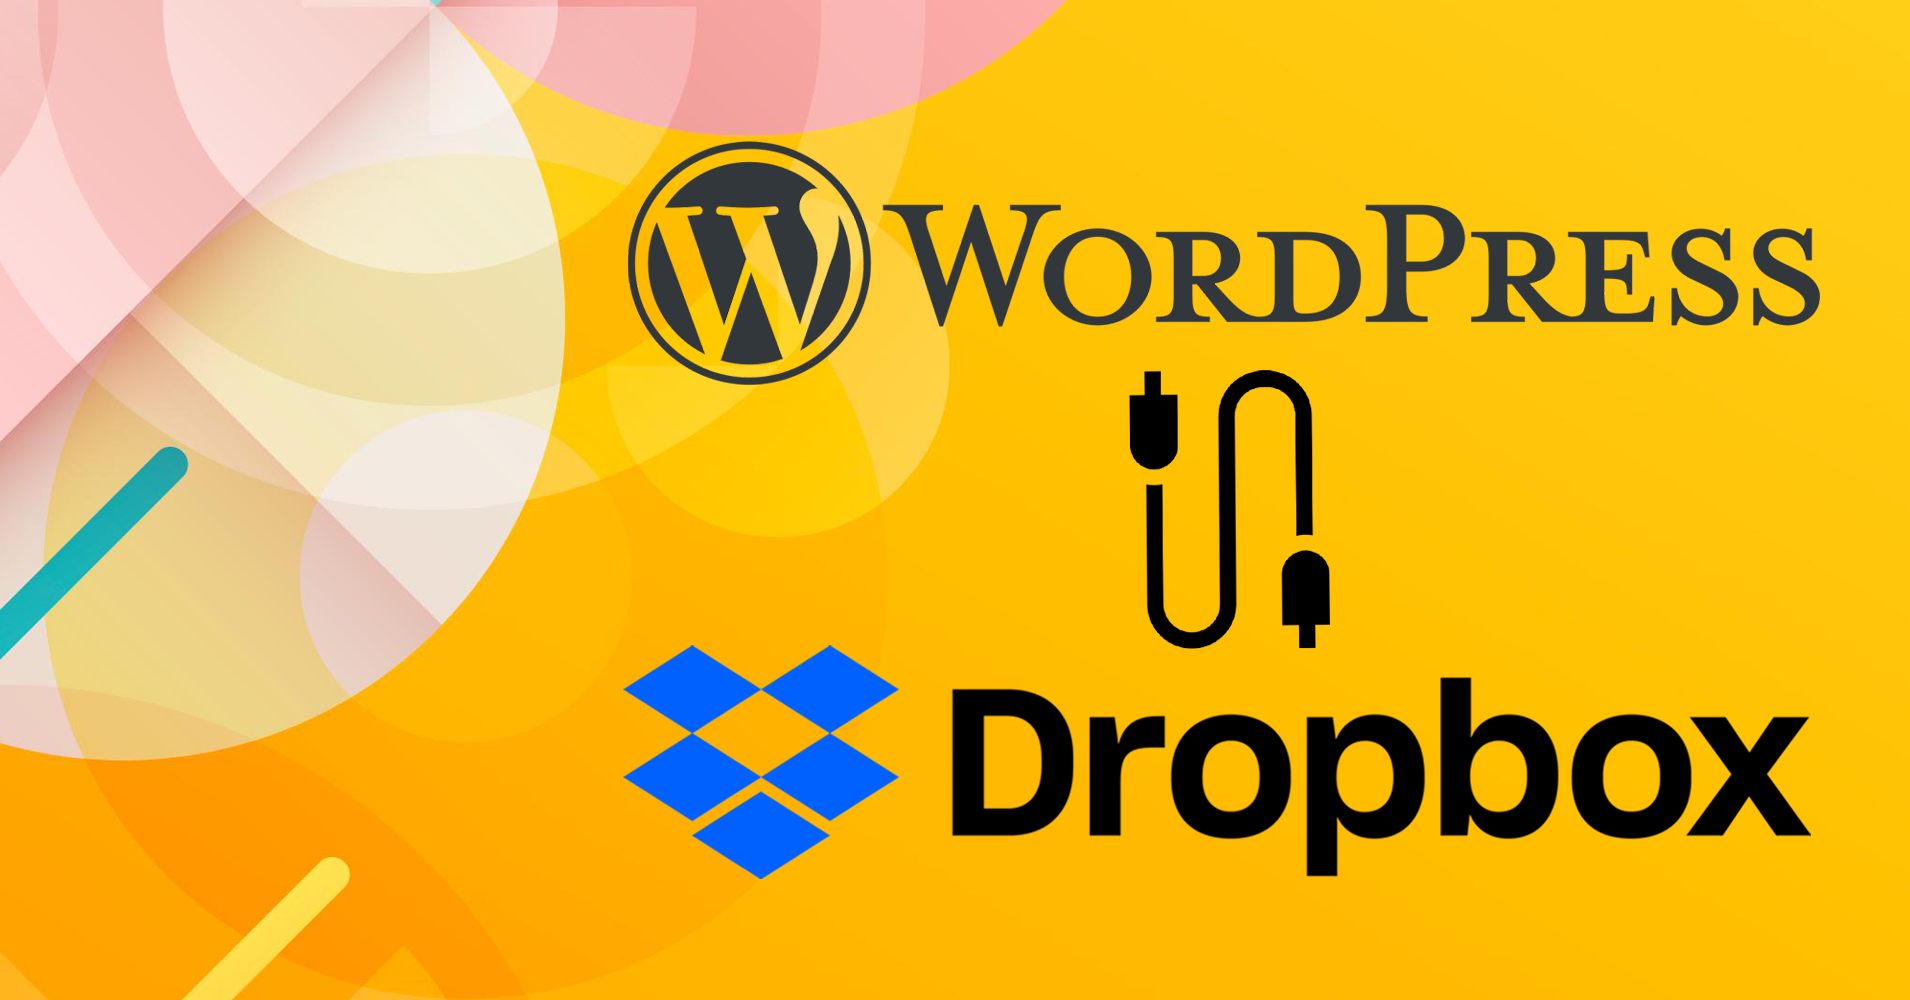 WordPress Dropbox Plugins